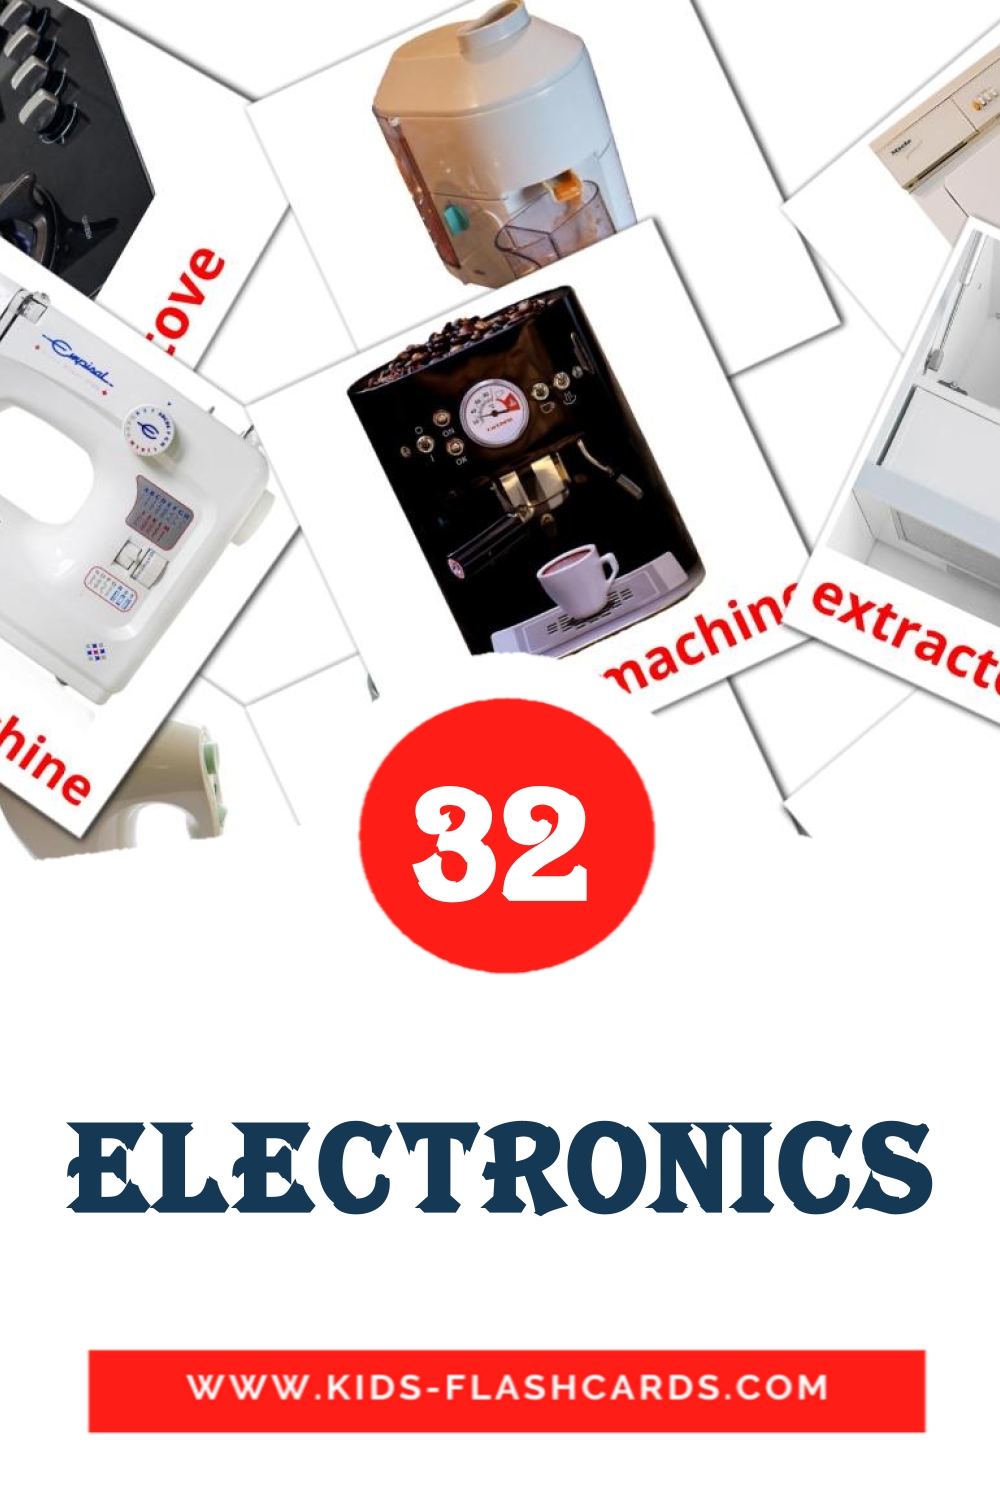 32 tarjetas didacticas de Electronics para el jardín de infancia en inglés